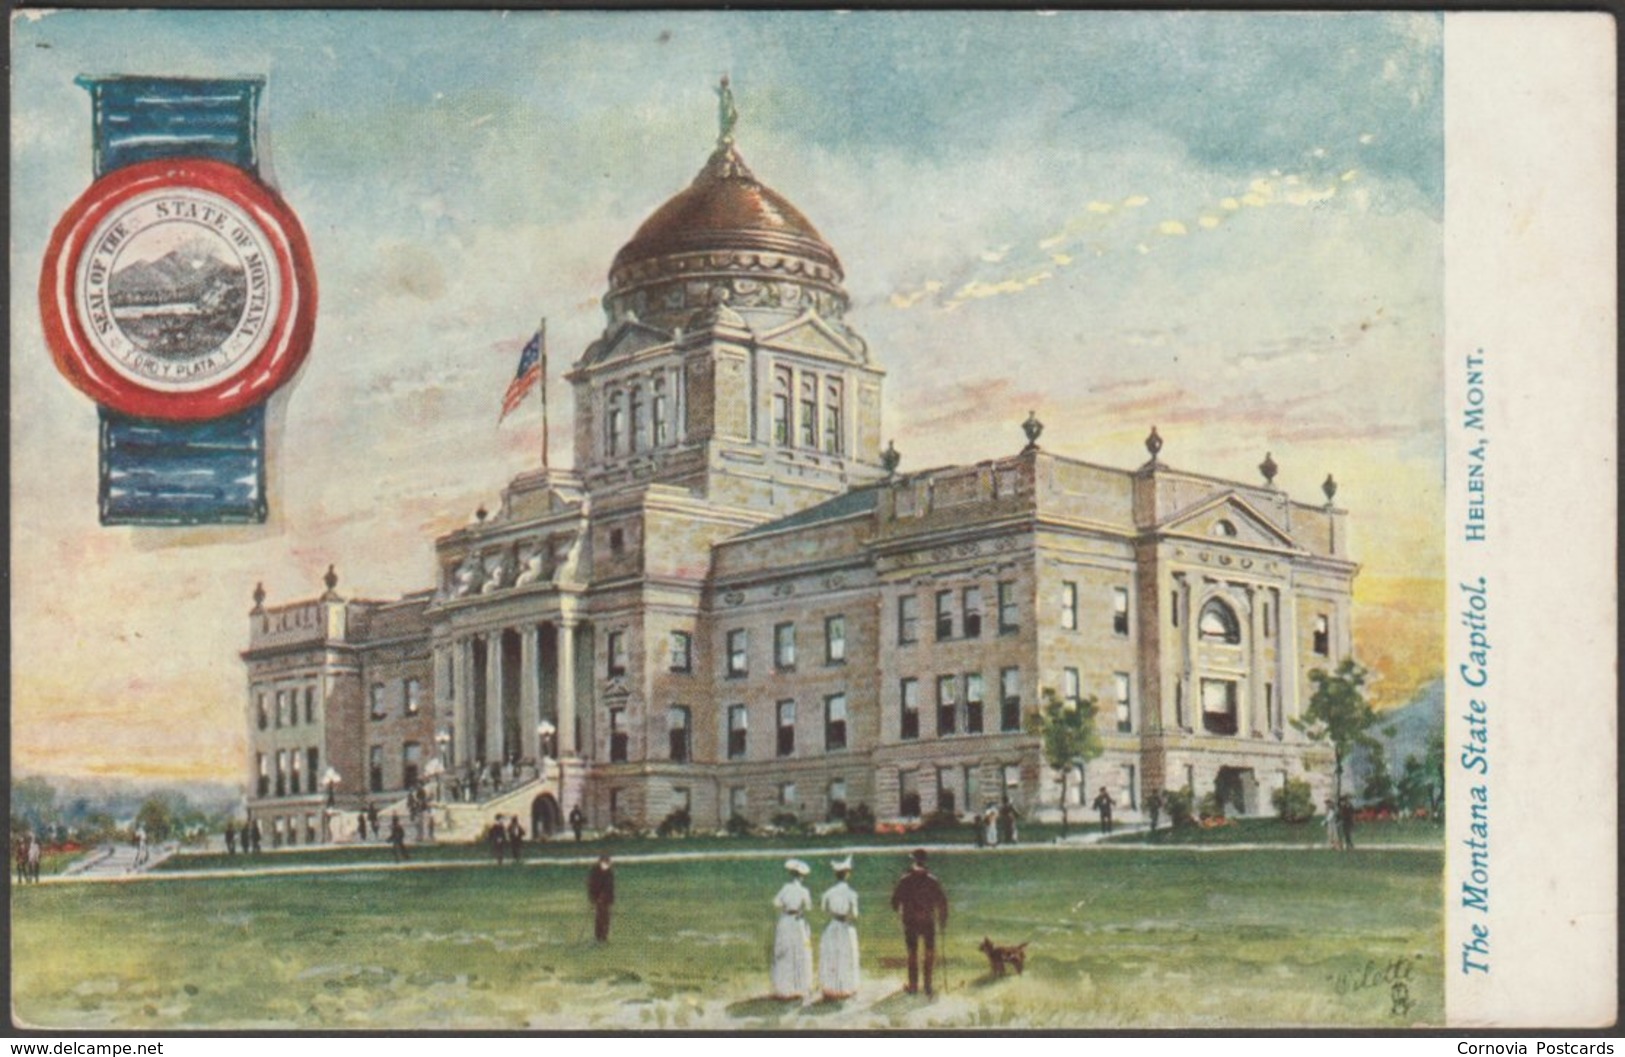 State Capitol, Helena, Montana, C.1905-10 - Tuck's Oilette Postcard - Helena